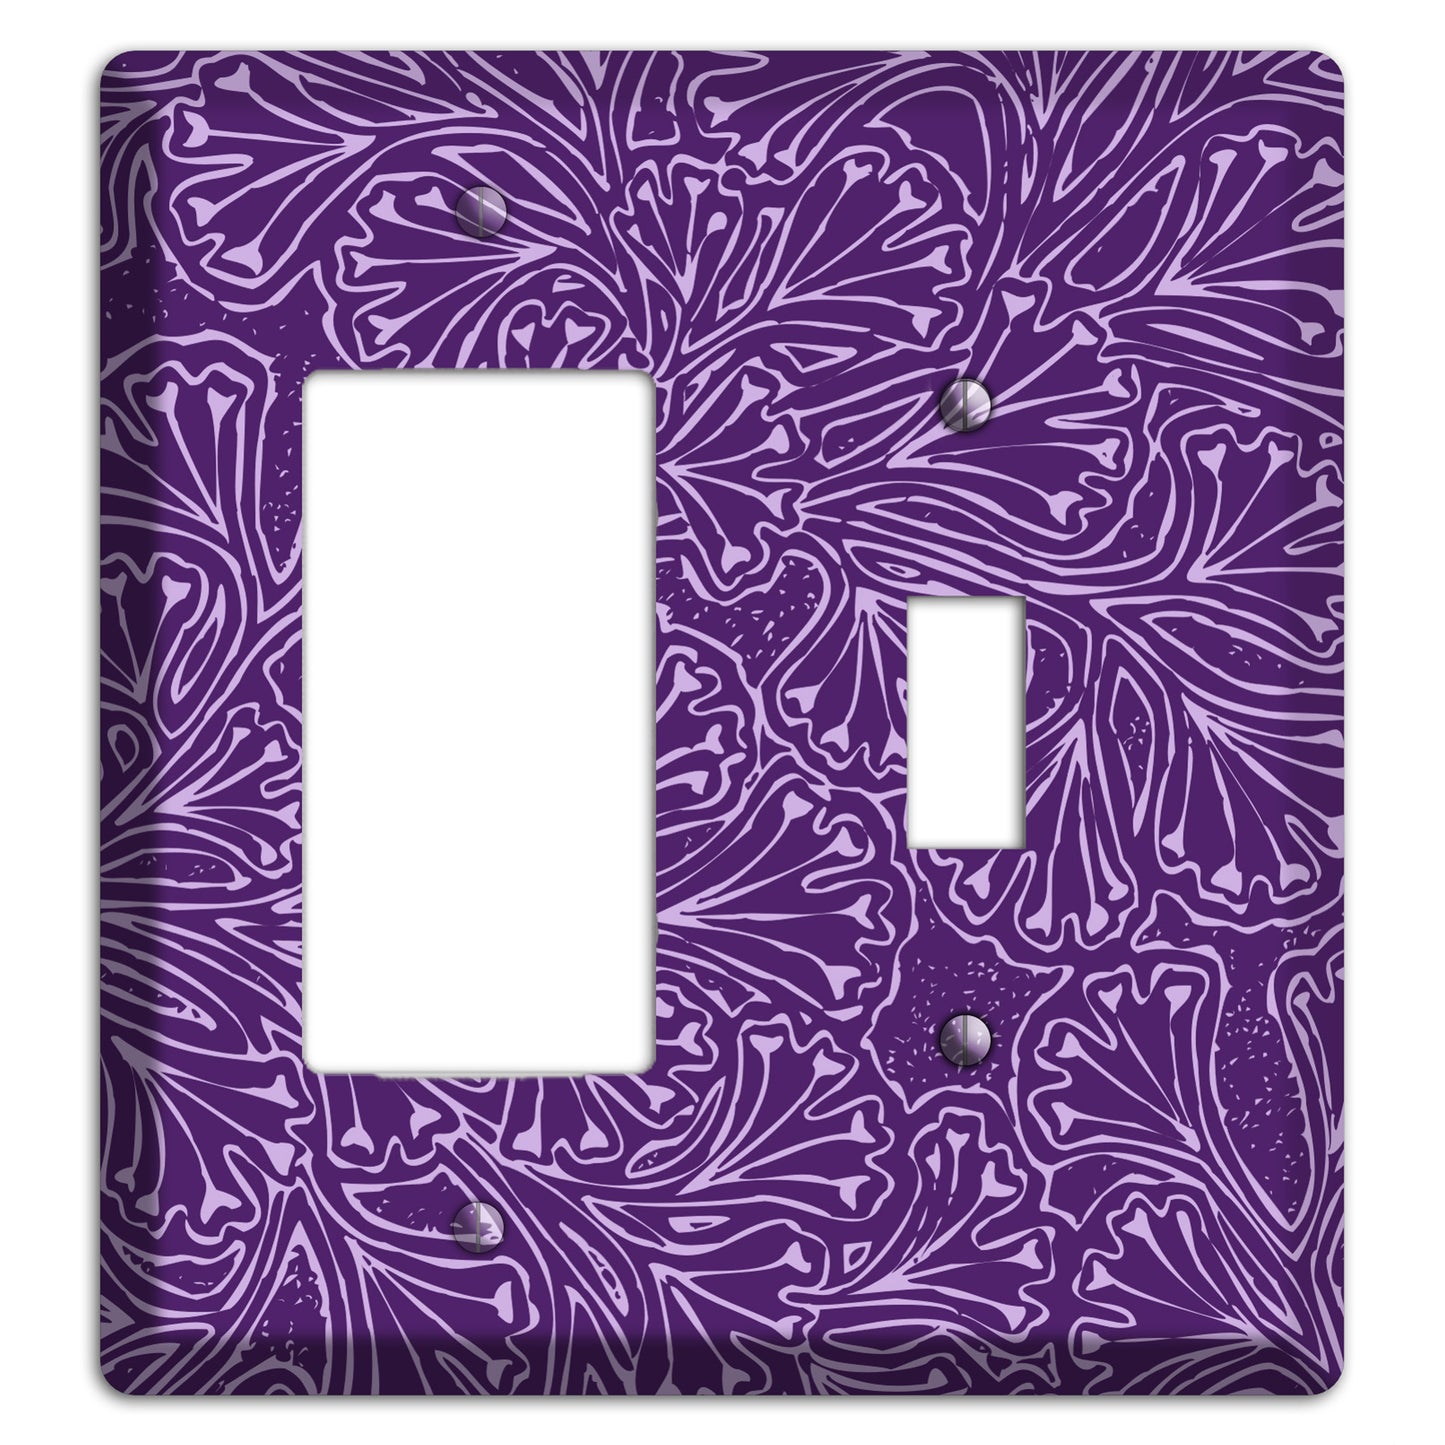 Deco Purple Interlocking Floral Rocker / Toggle Wallplate